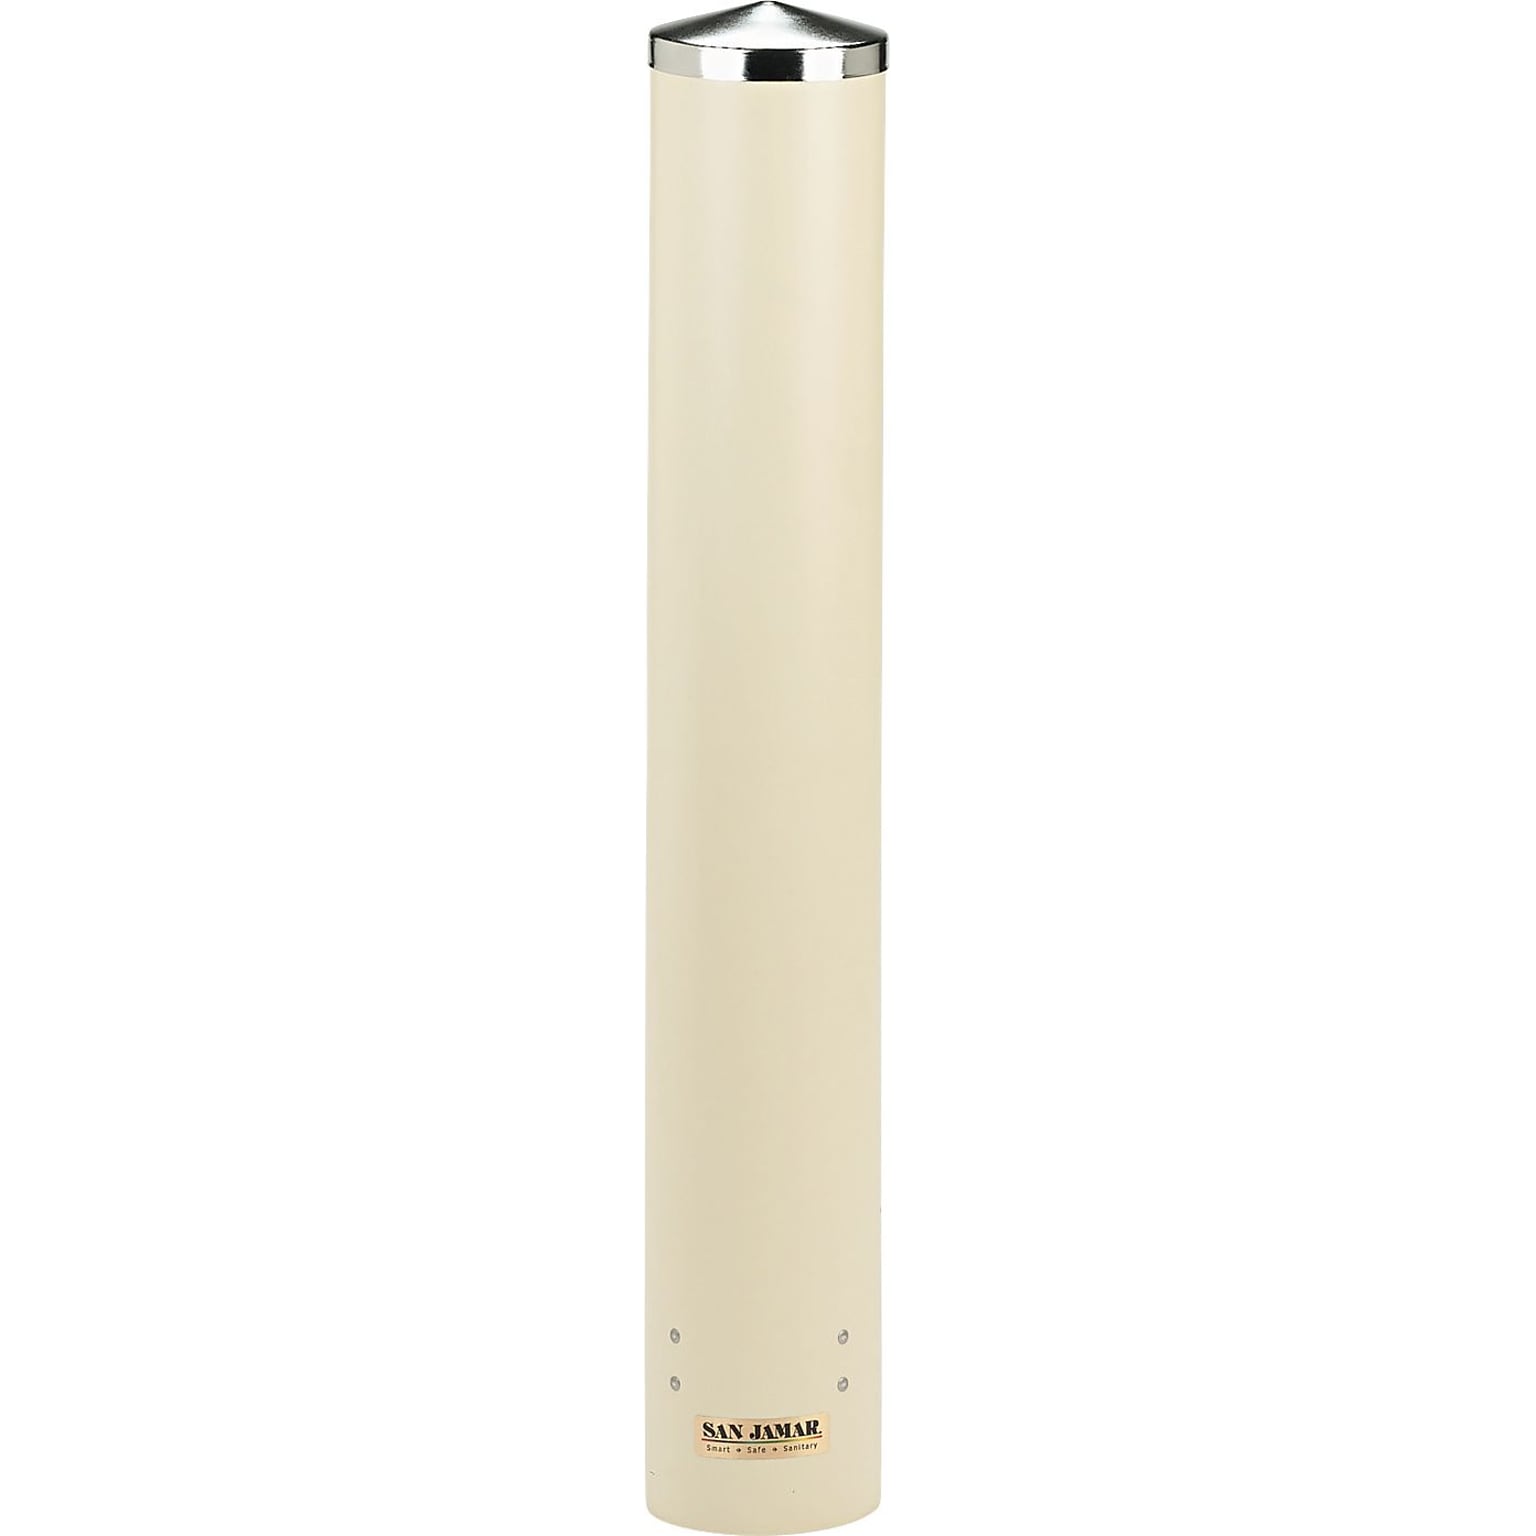 San Jamar® Foam Cup Dispenser with Removable Cap for 10 oz. Cups, 23 1/2(H) x 3 1/4(Dia), Sand